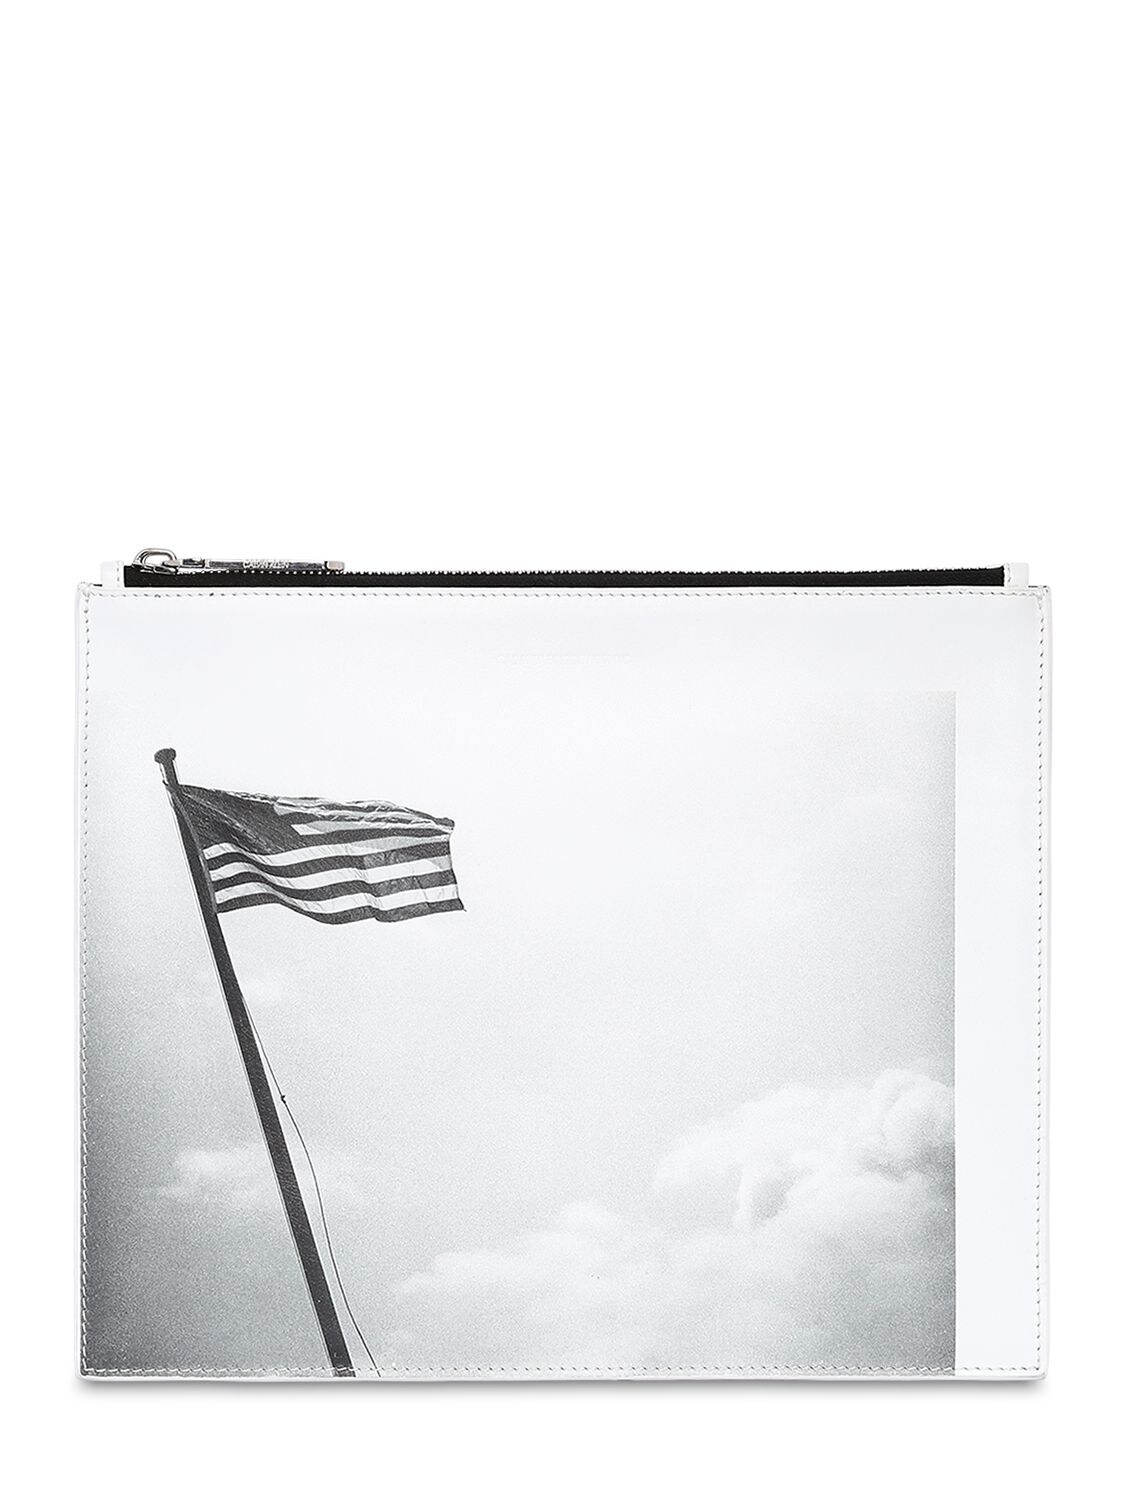 CALVIN KLEIN 205W39NYC AMERICAN FLAG PRINT LEATHER POUCH,68IOFV002-OTEy0